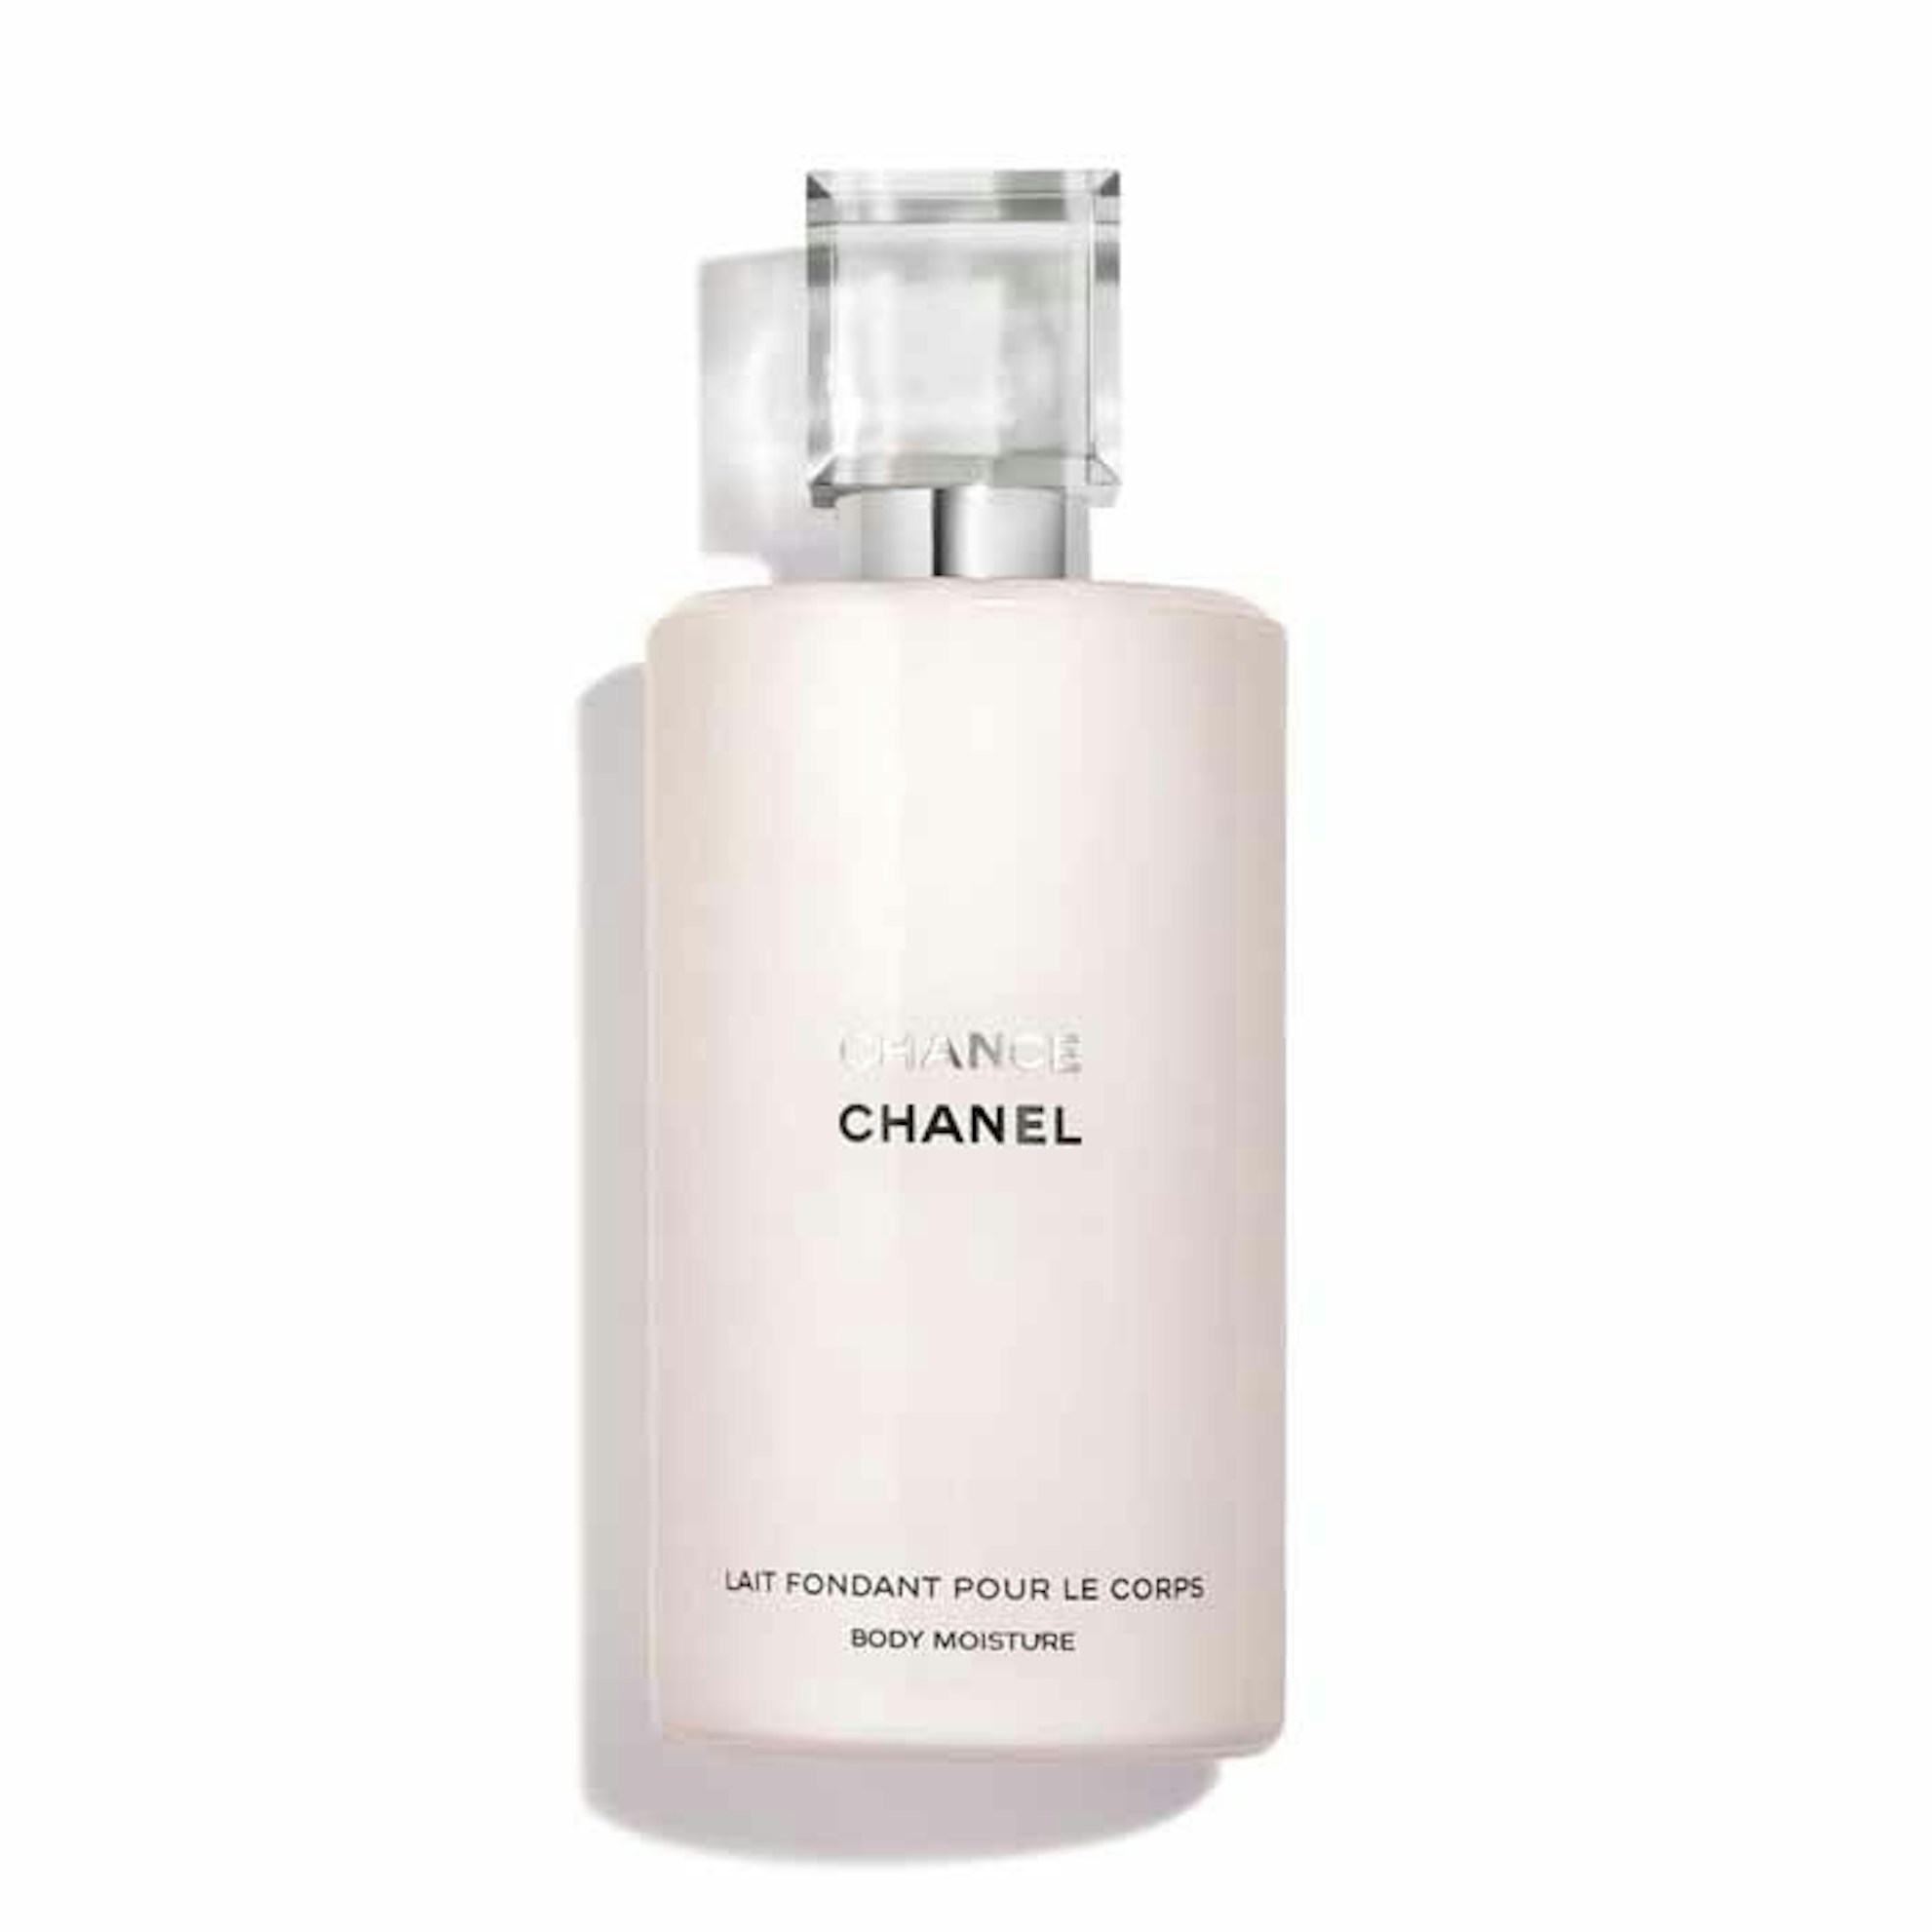 CHANEL Body Moisture 200ml | The Fragrance Shop